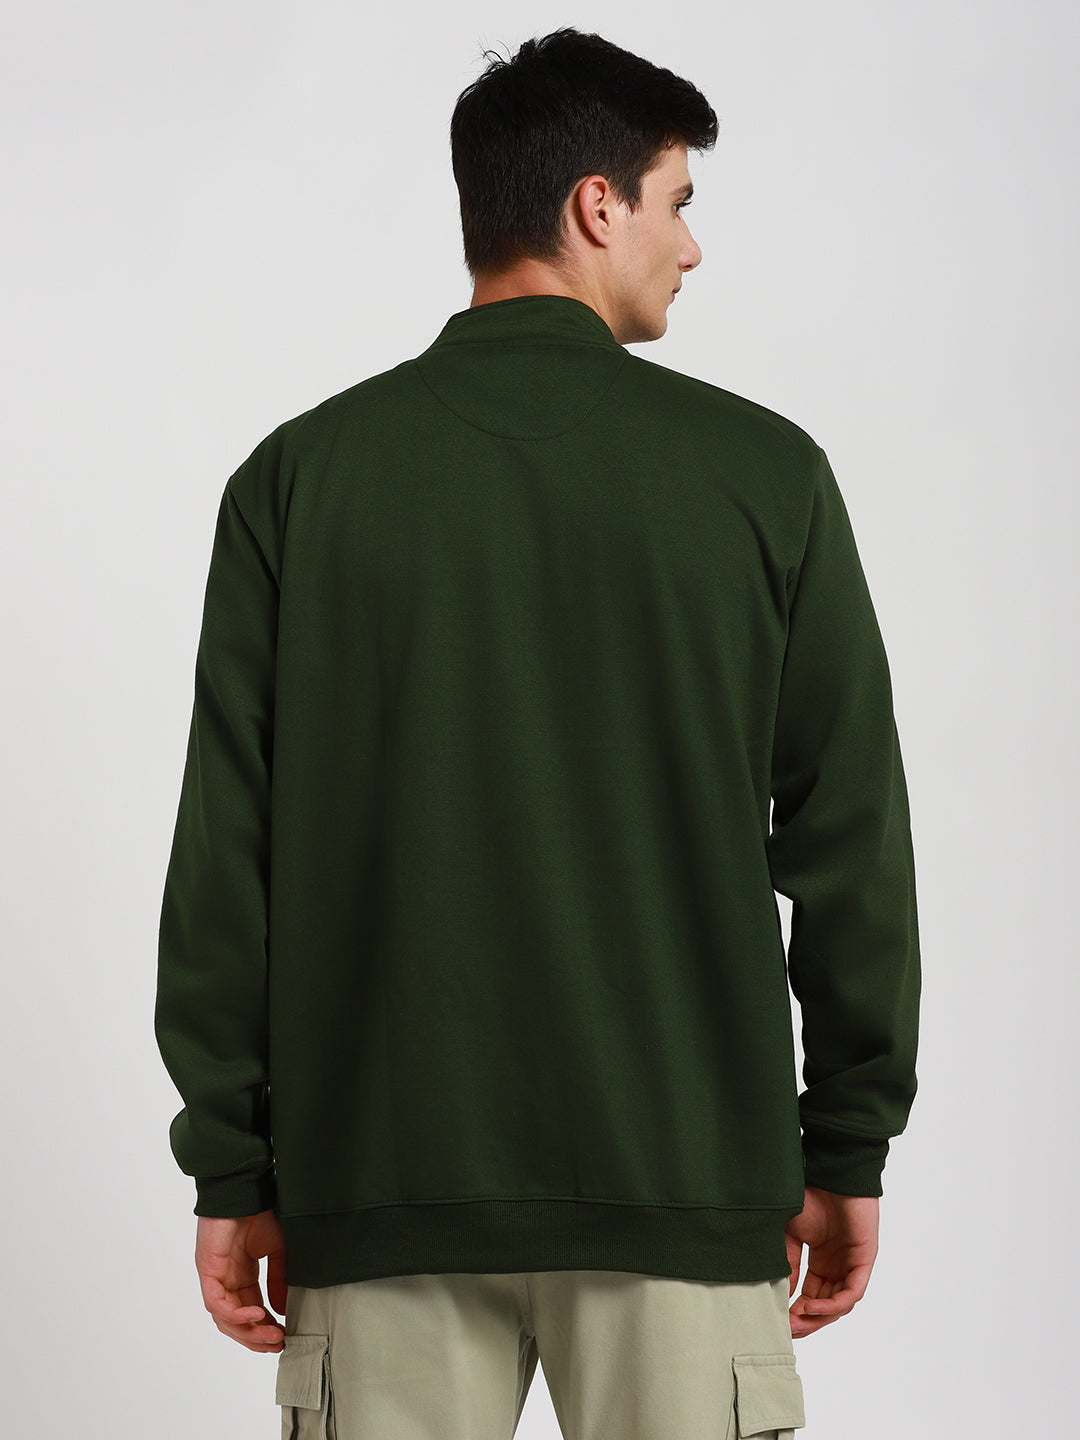 Dennis Lingo Men's Olive Mock Neck Full Sleeves Sweatshirt